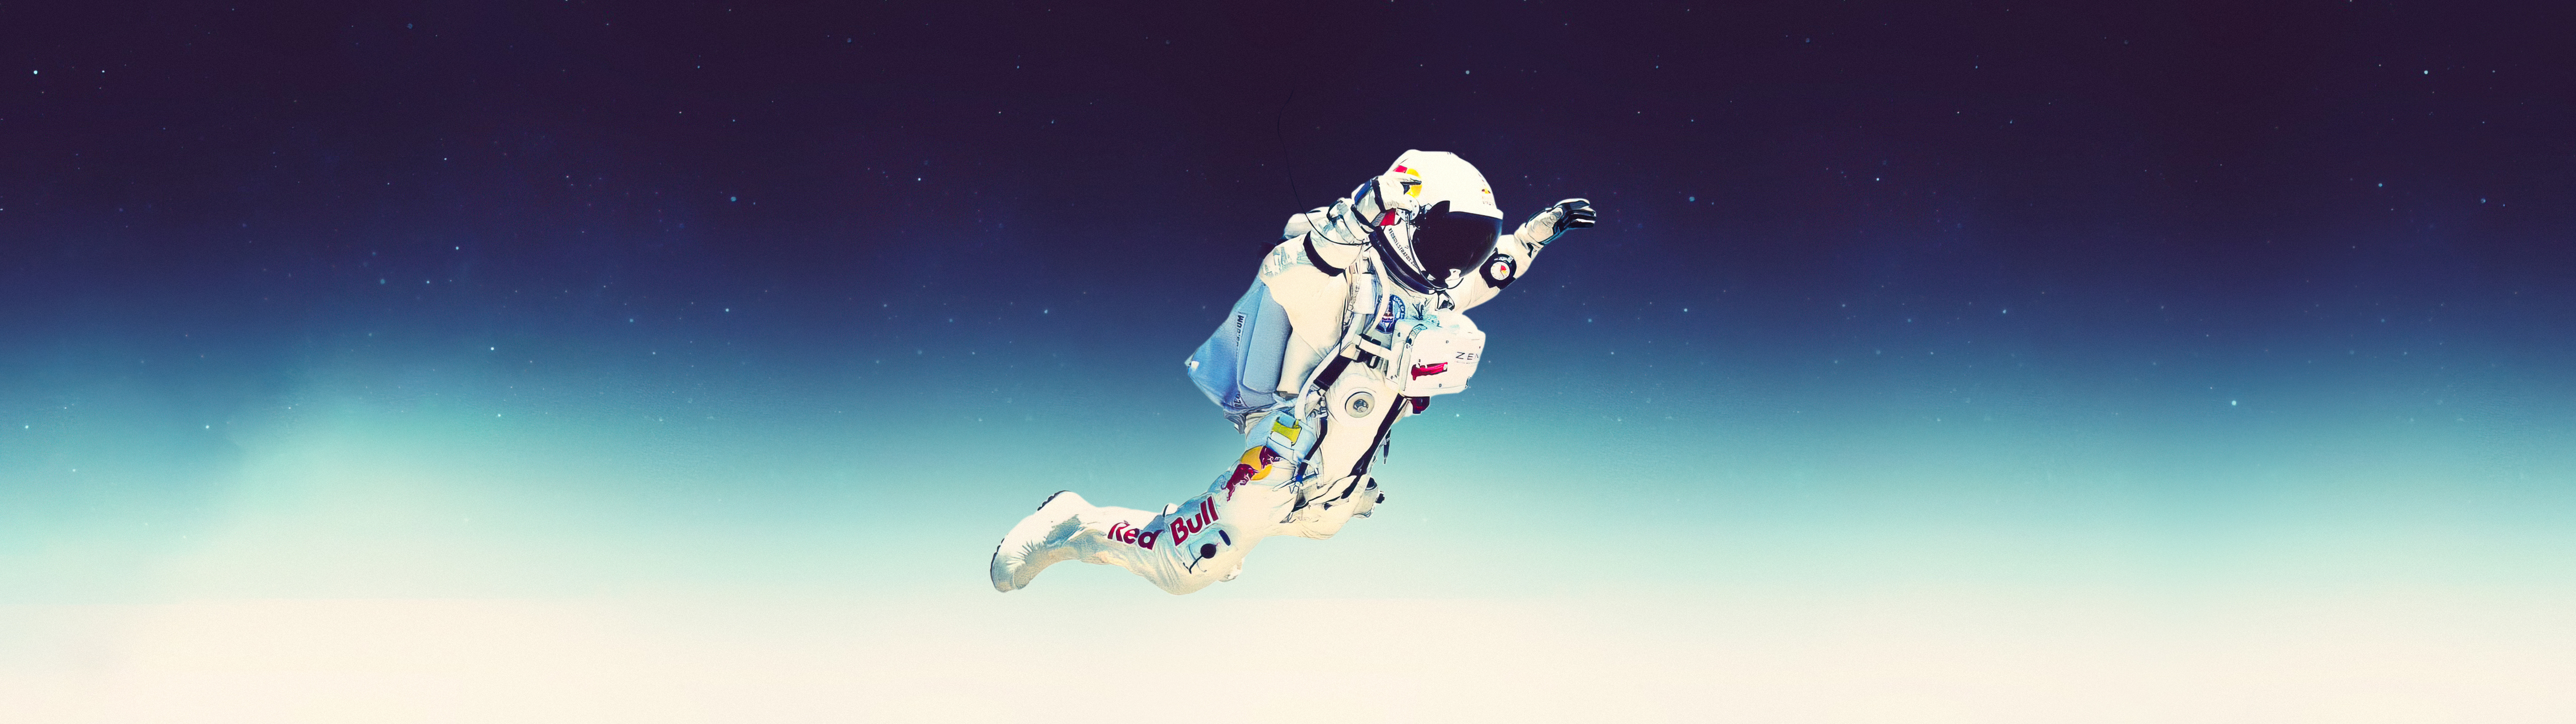 Ultrawide Skydiving Felix Baumgartner Red Bull Astronaut 5120x1440